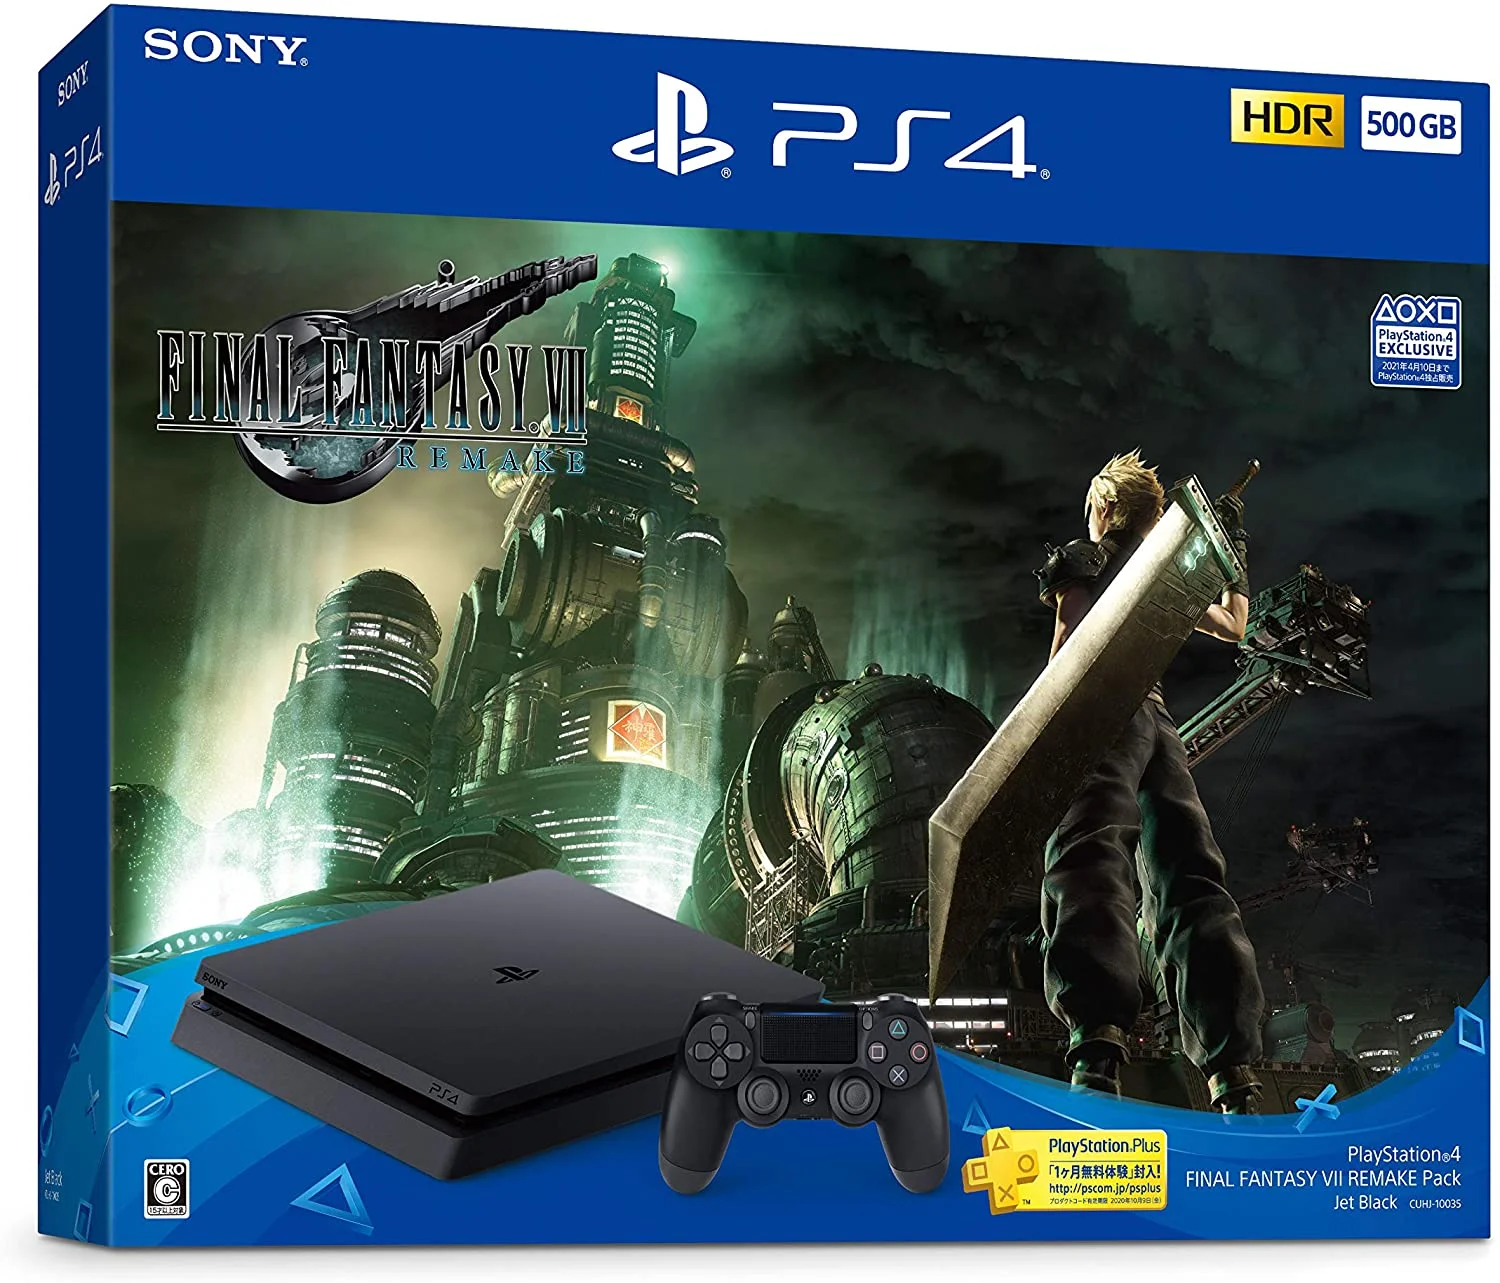  Sony PlayStation 4 Slim Final Fantasy VII Remake Bundle